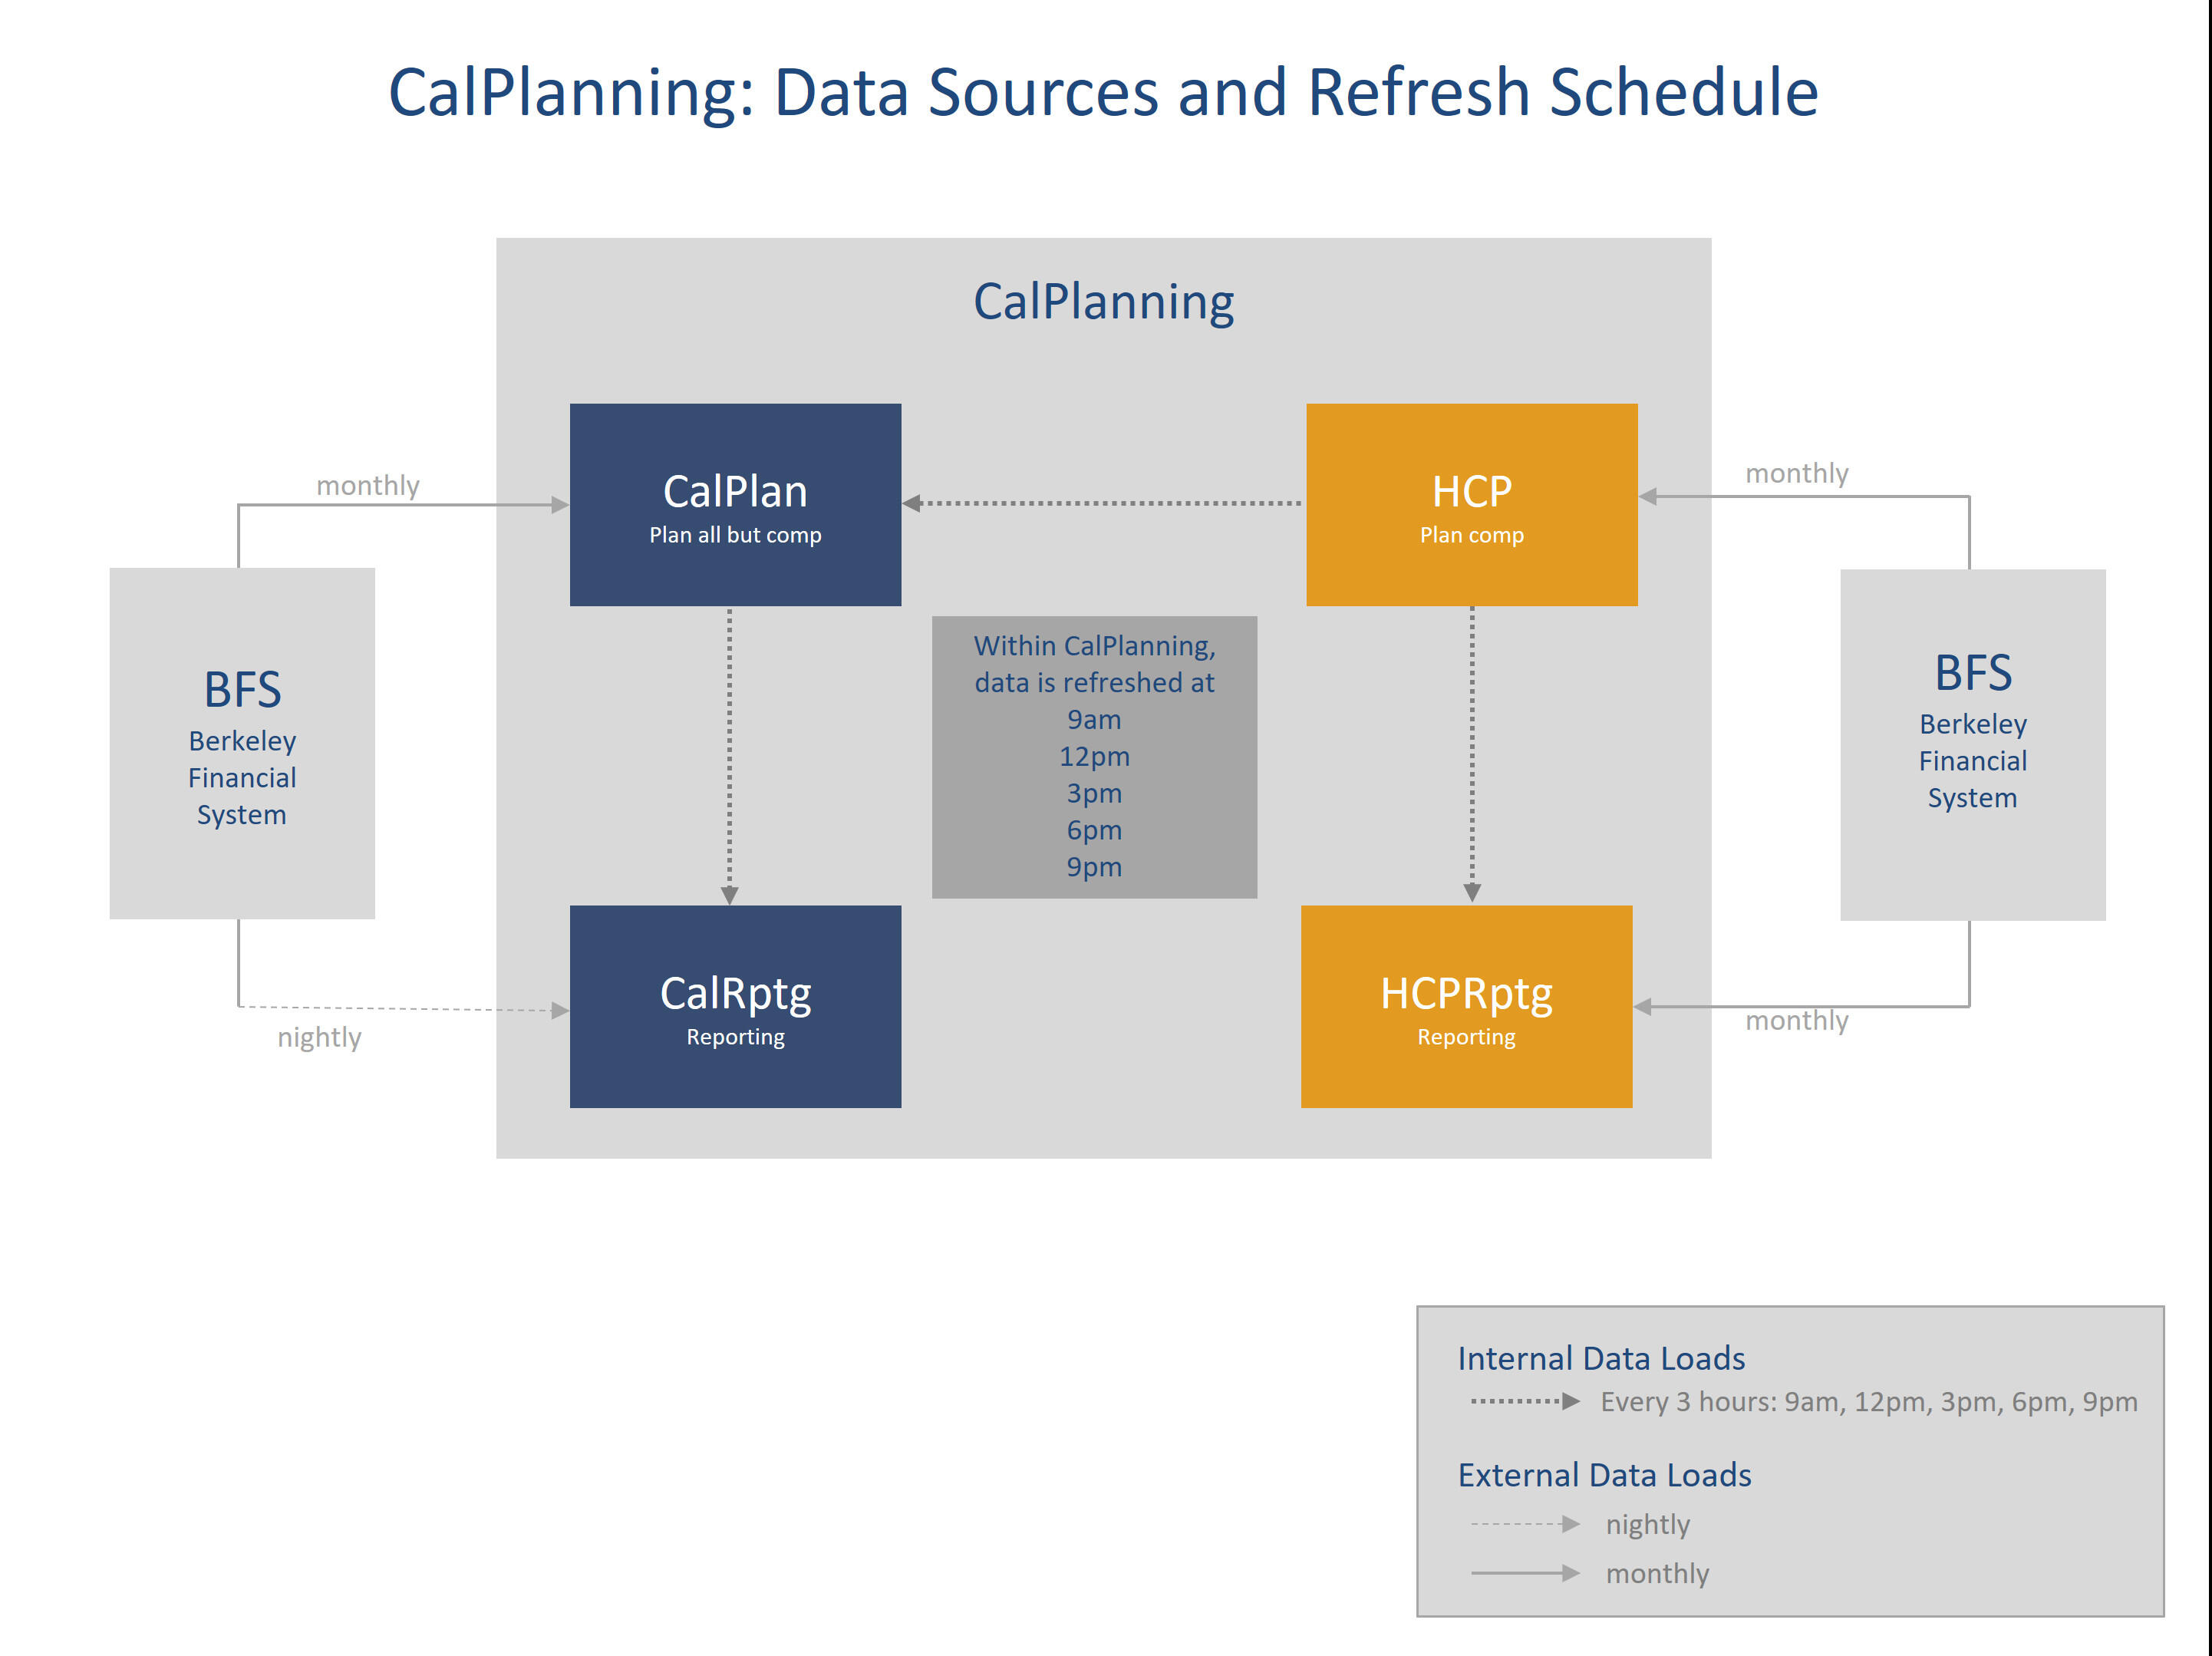 CalPlanning data sources and refresh schedule